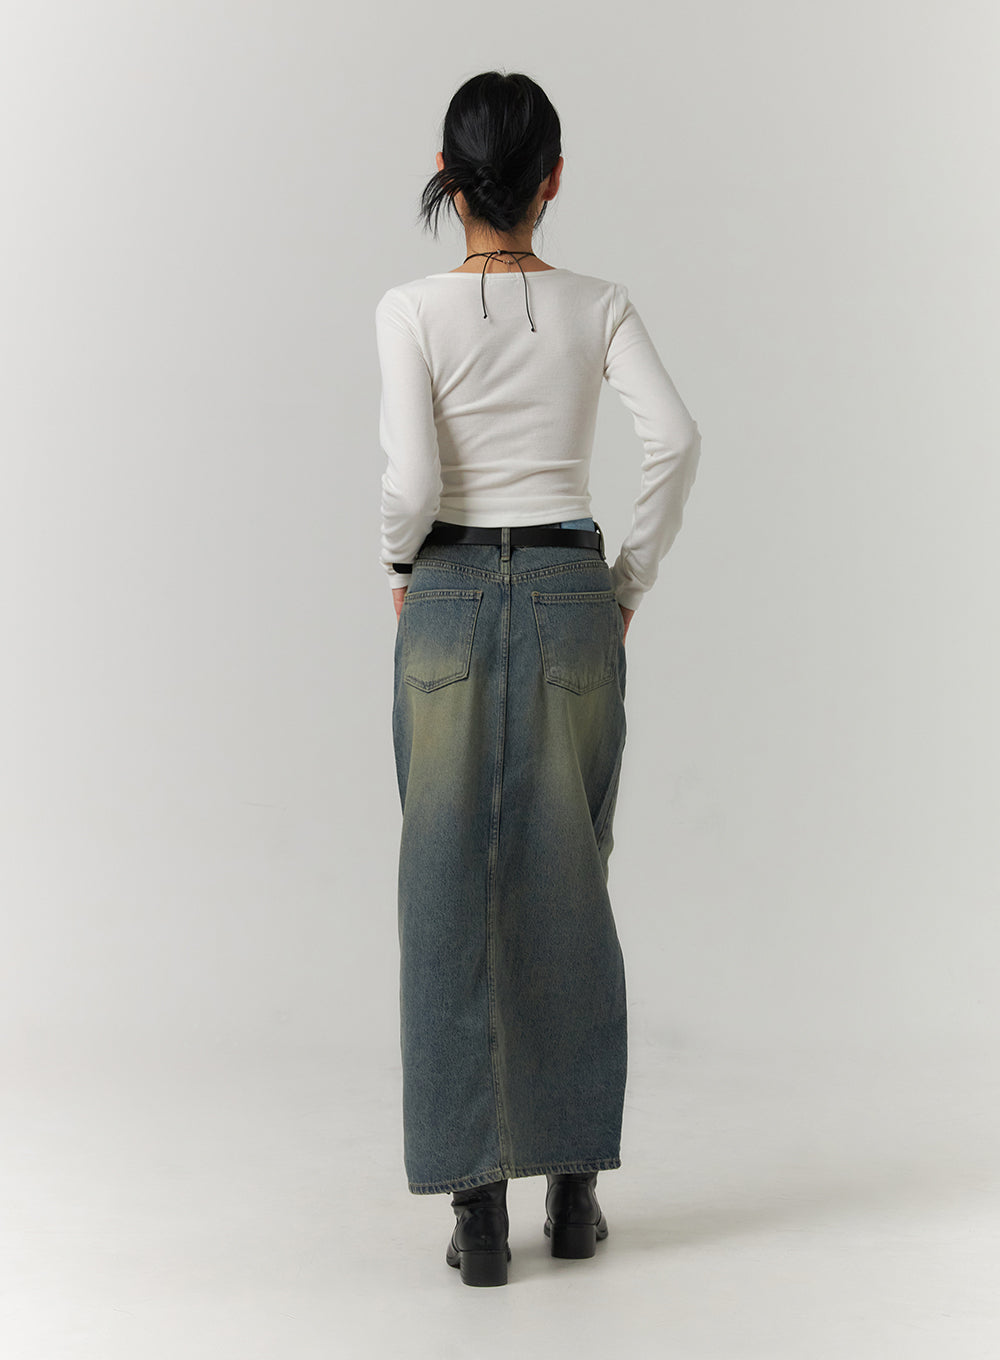 washed-denim-maxi-skirt-cj422